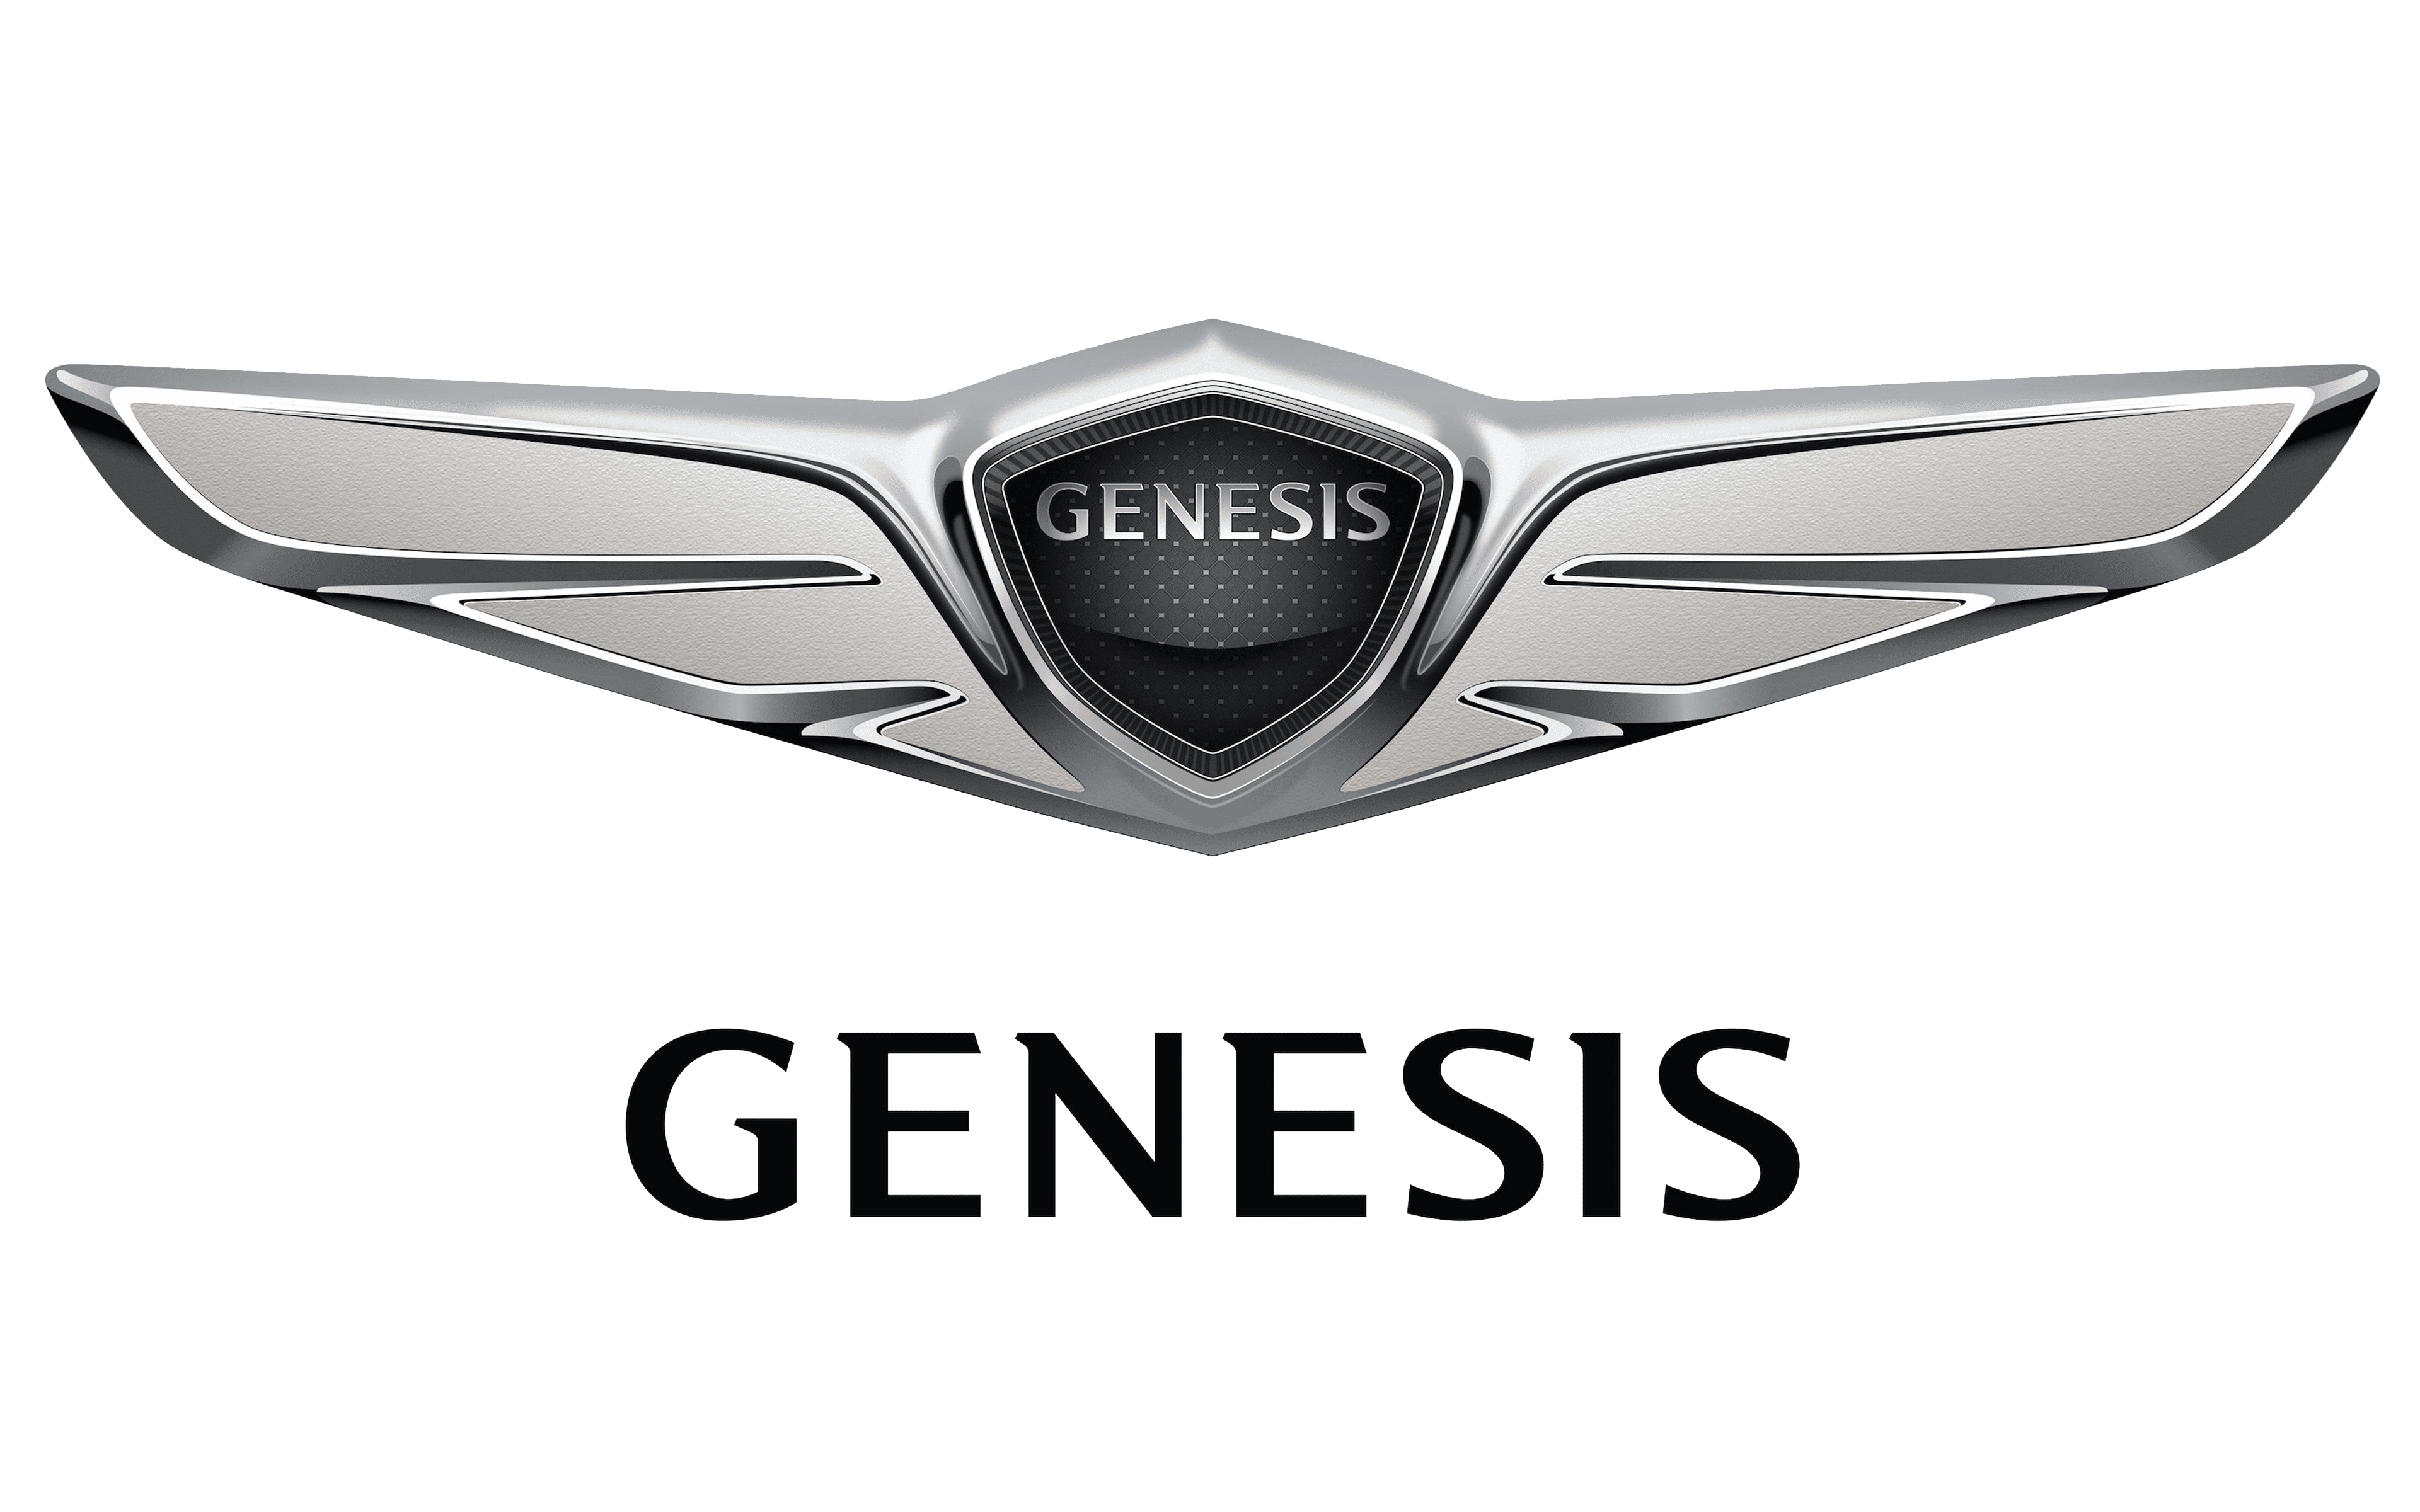 GENESIS Parts & Accessories